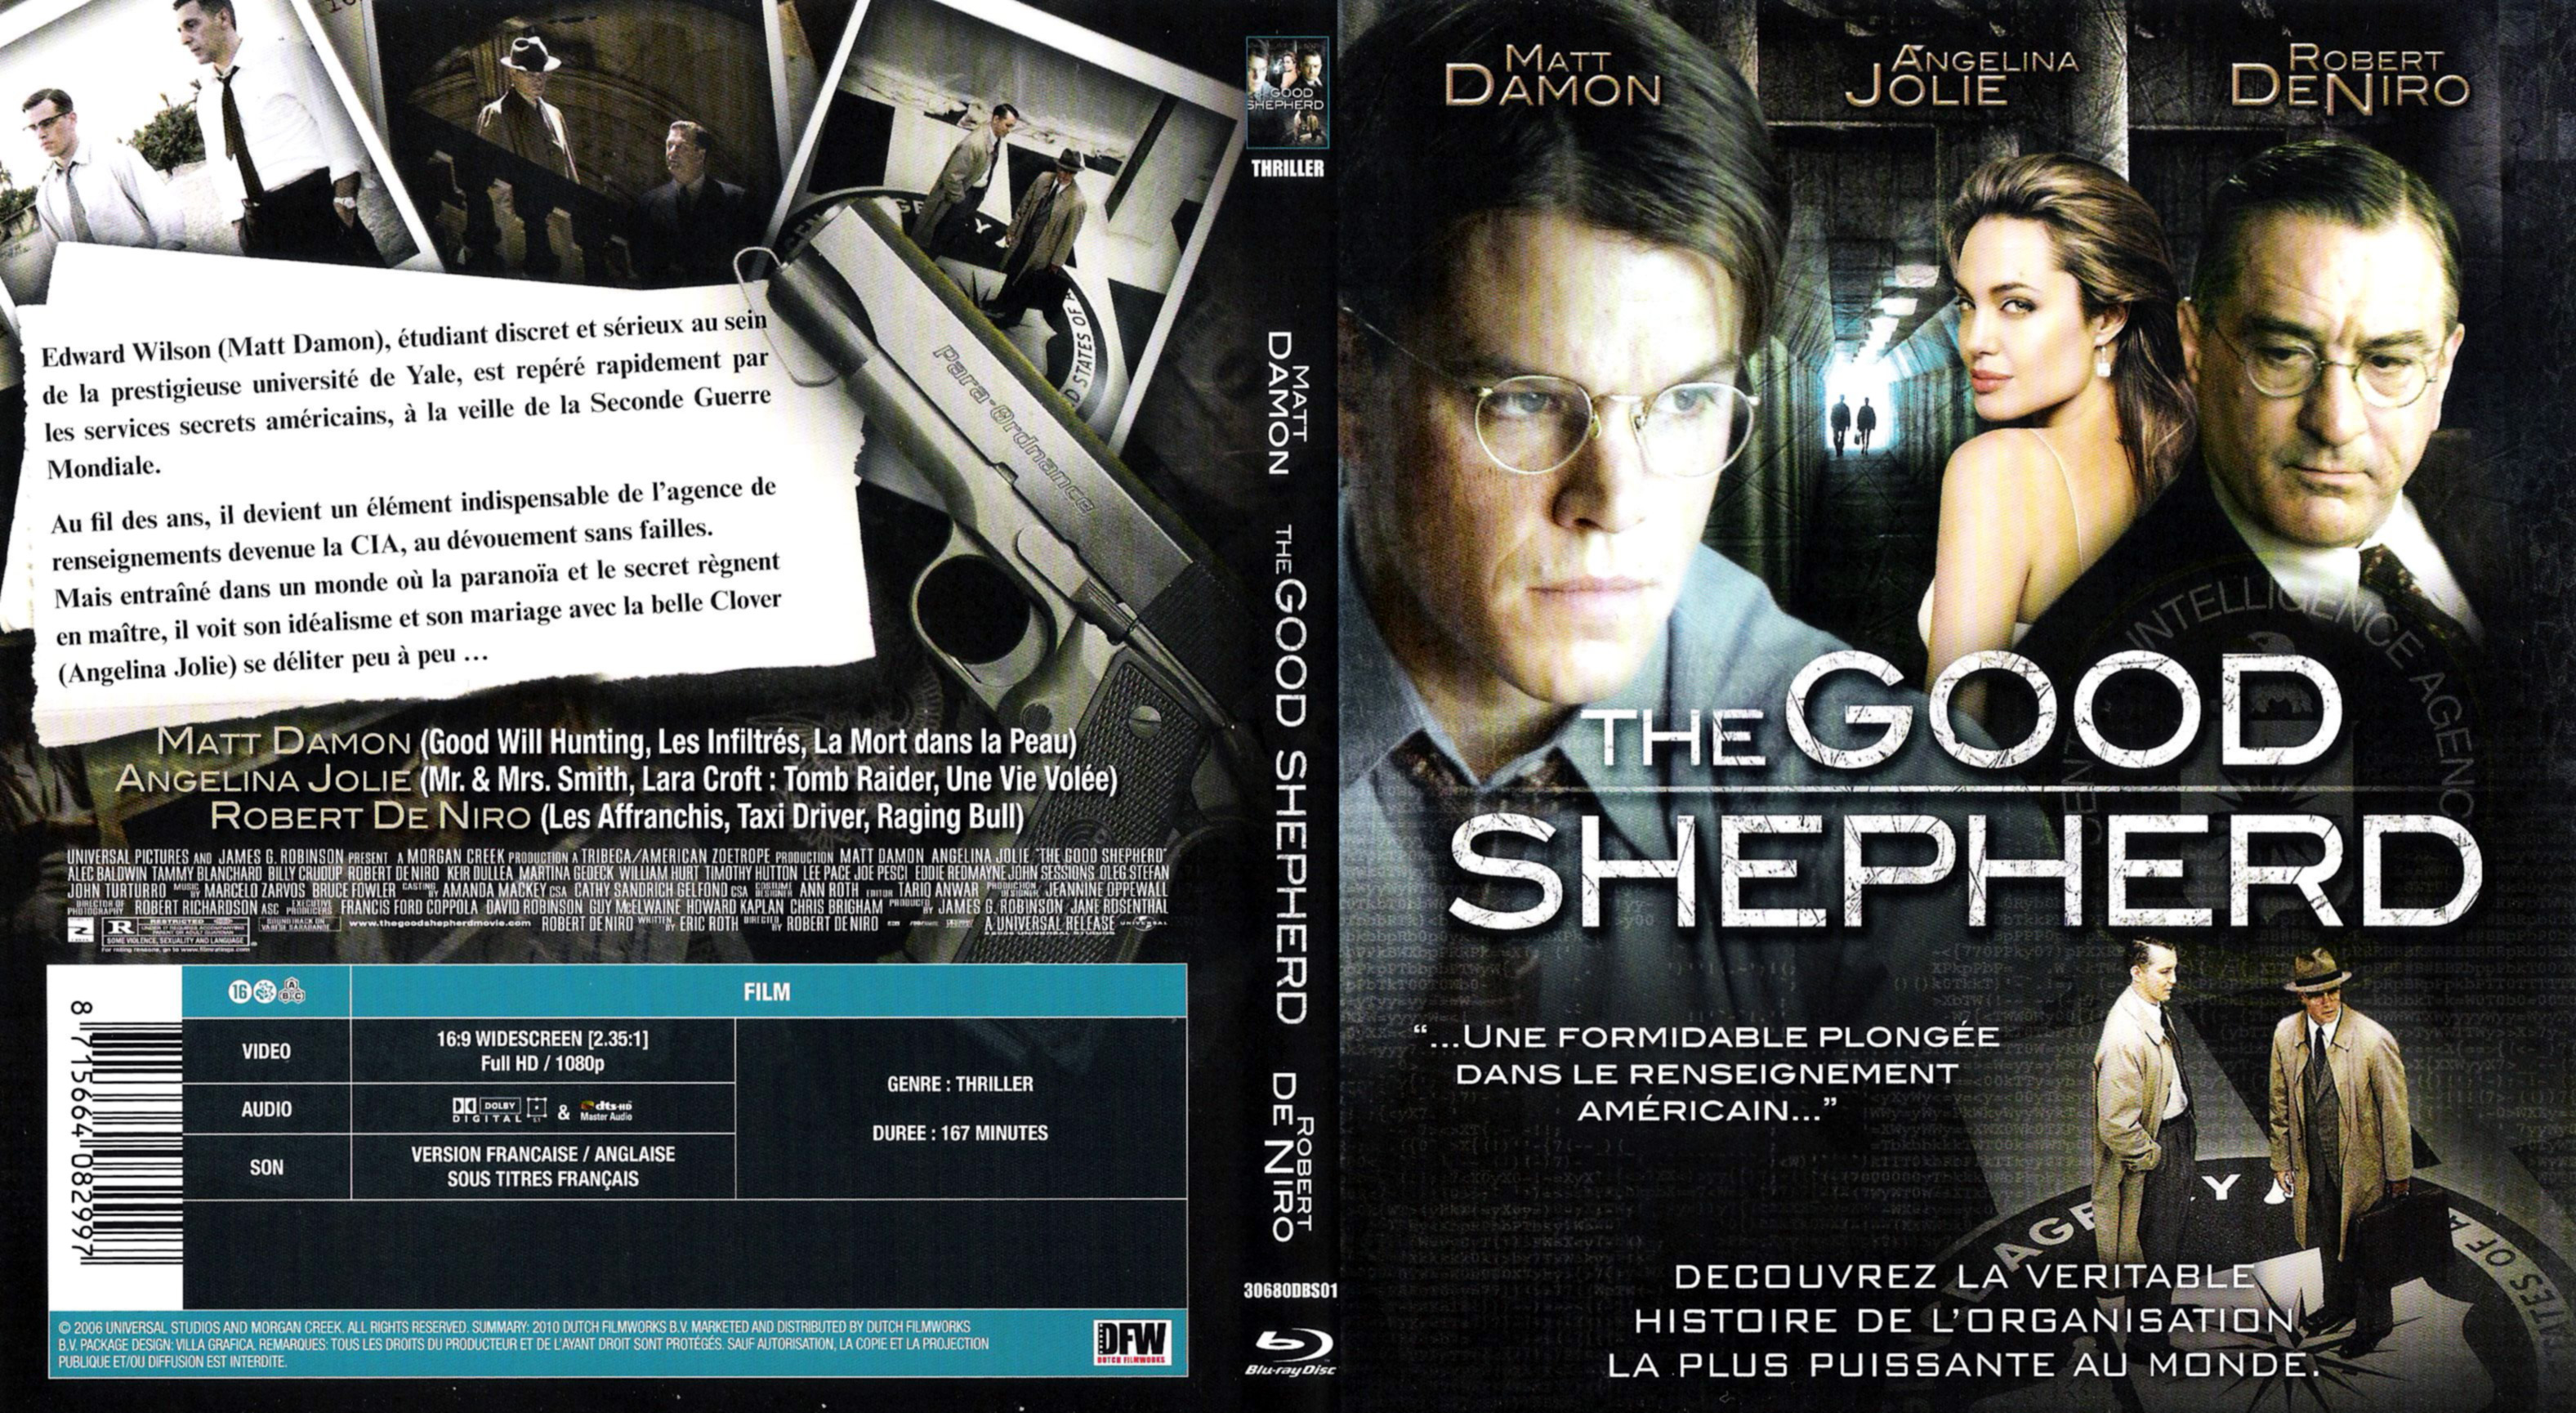 Jaquette DVD The good shepherd (BLU-RAY)